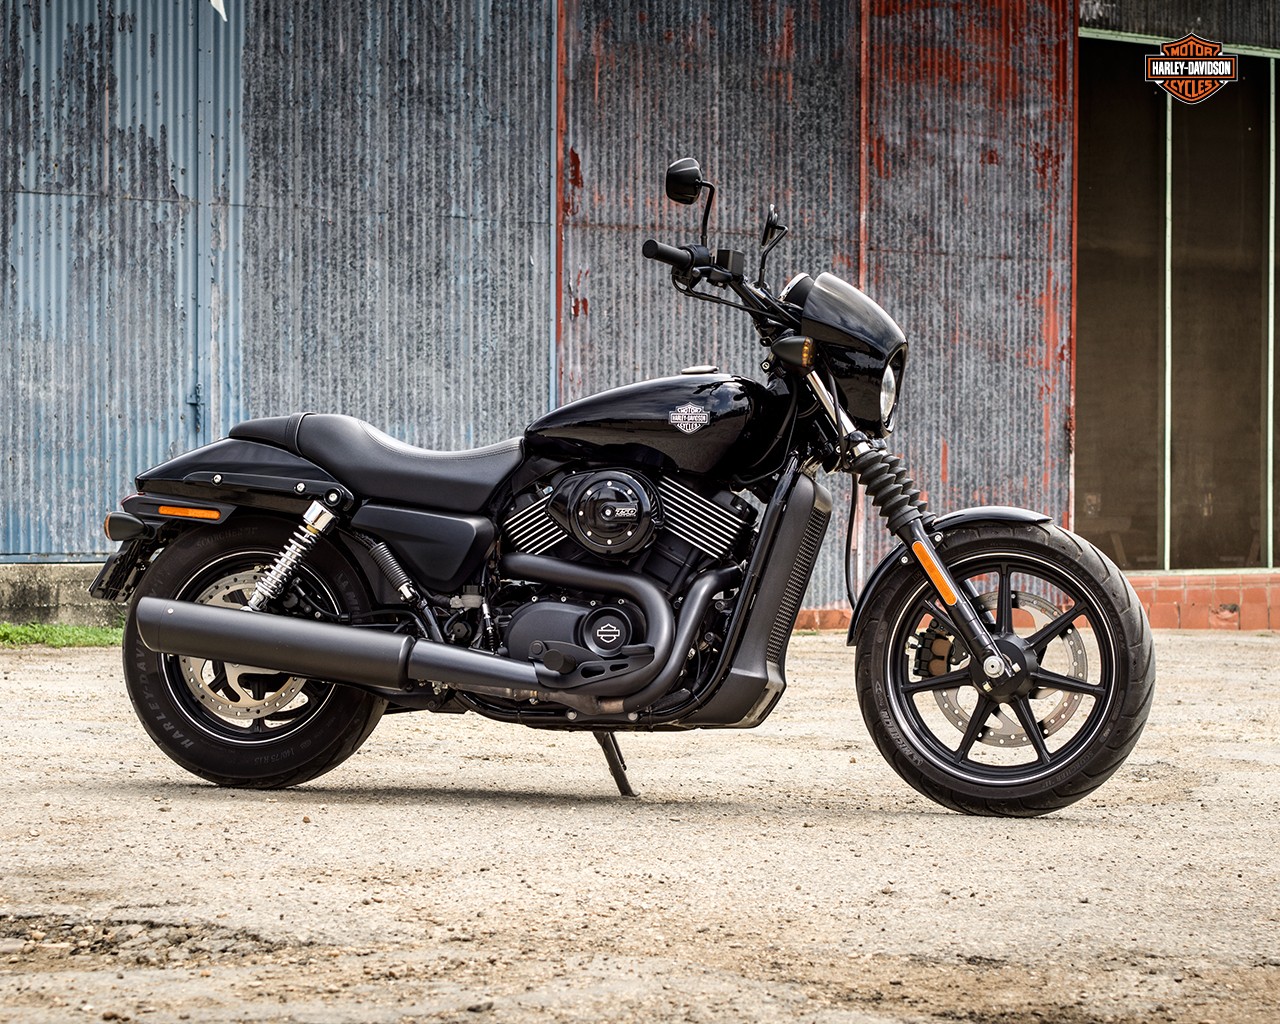 Harley Davidson Softail Buyback Offer 100 Money Back On Street 750 Amp Street Rod